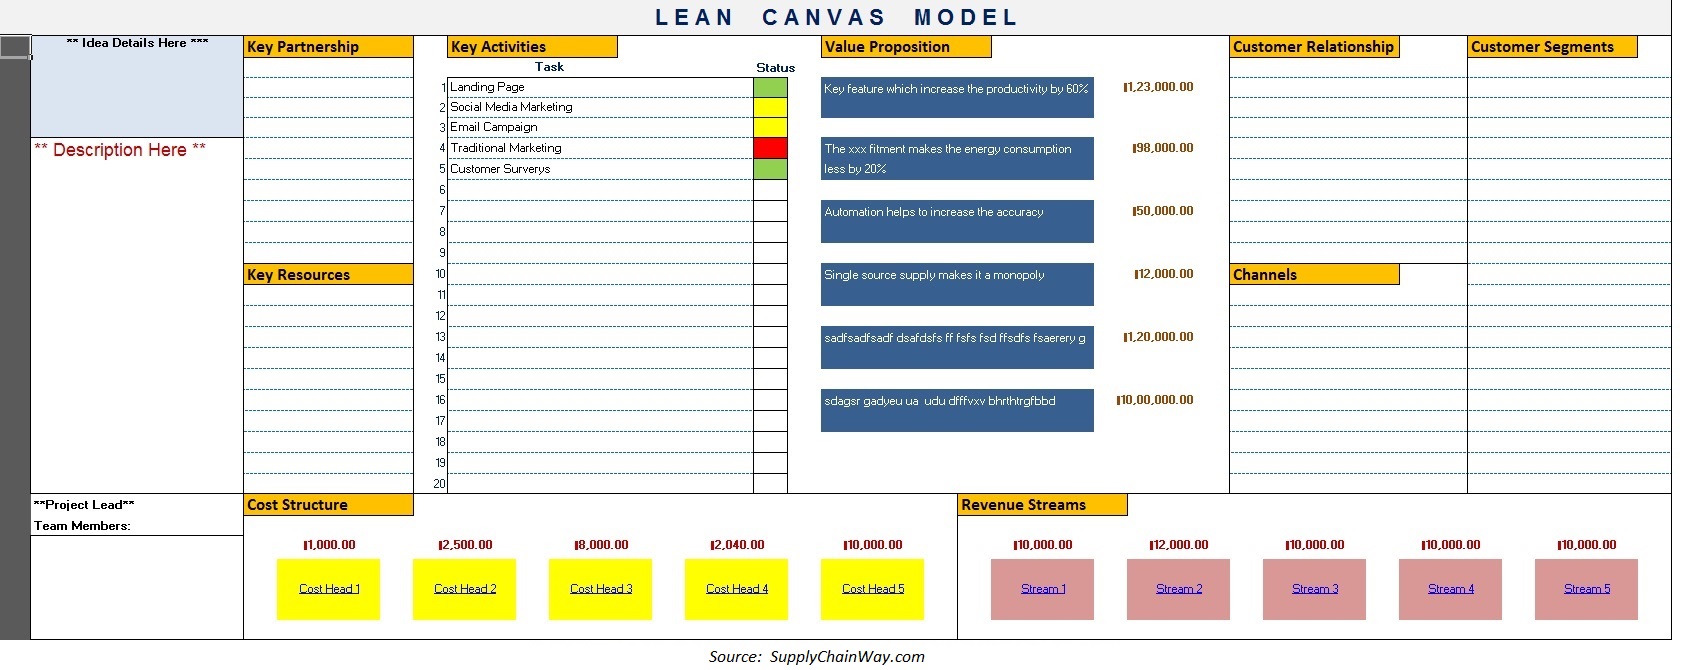 Lean Canvas Model for an Ireland based organization